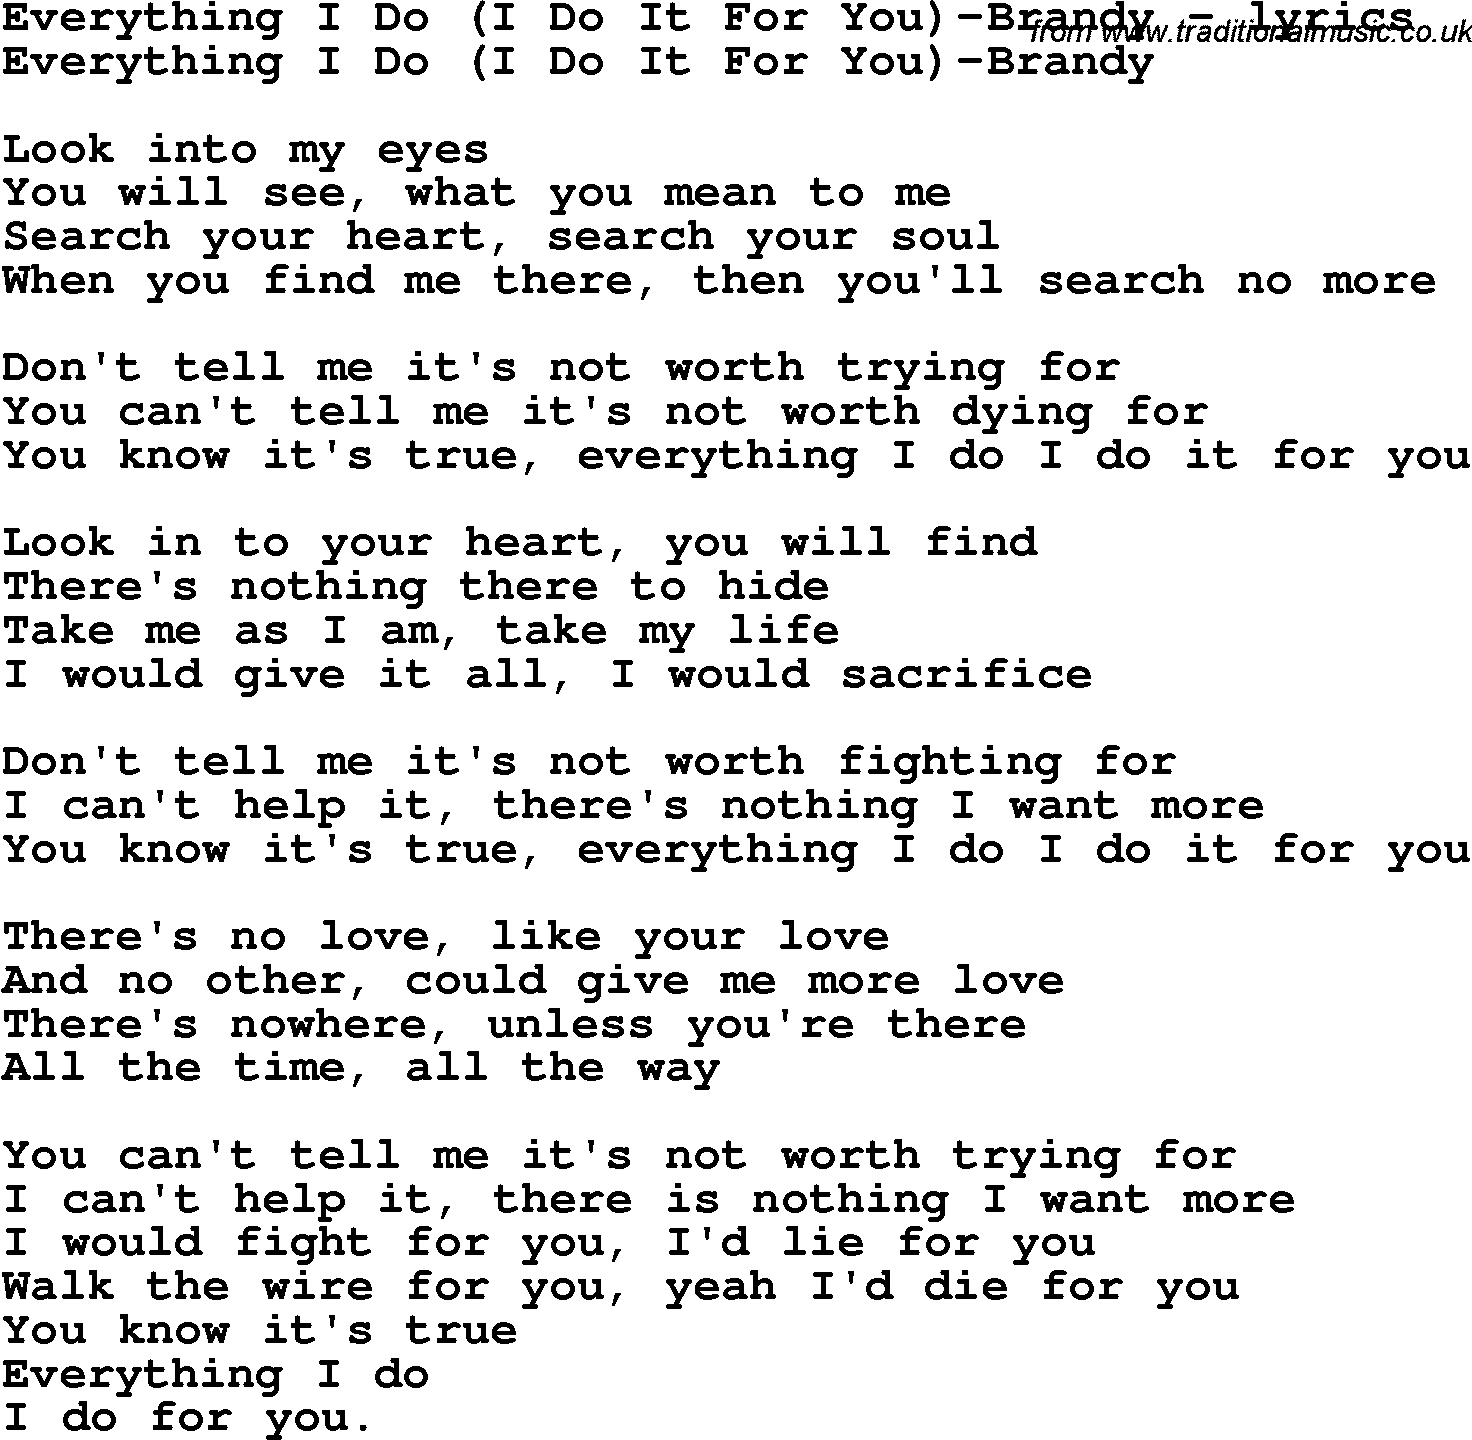 Love Song Lyrics for: Everything I Do (I Do It For You)-Brandy